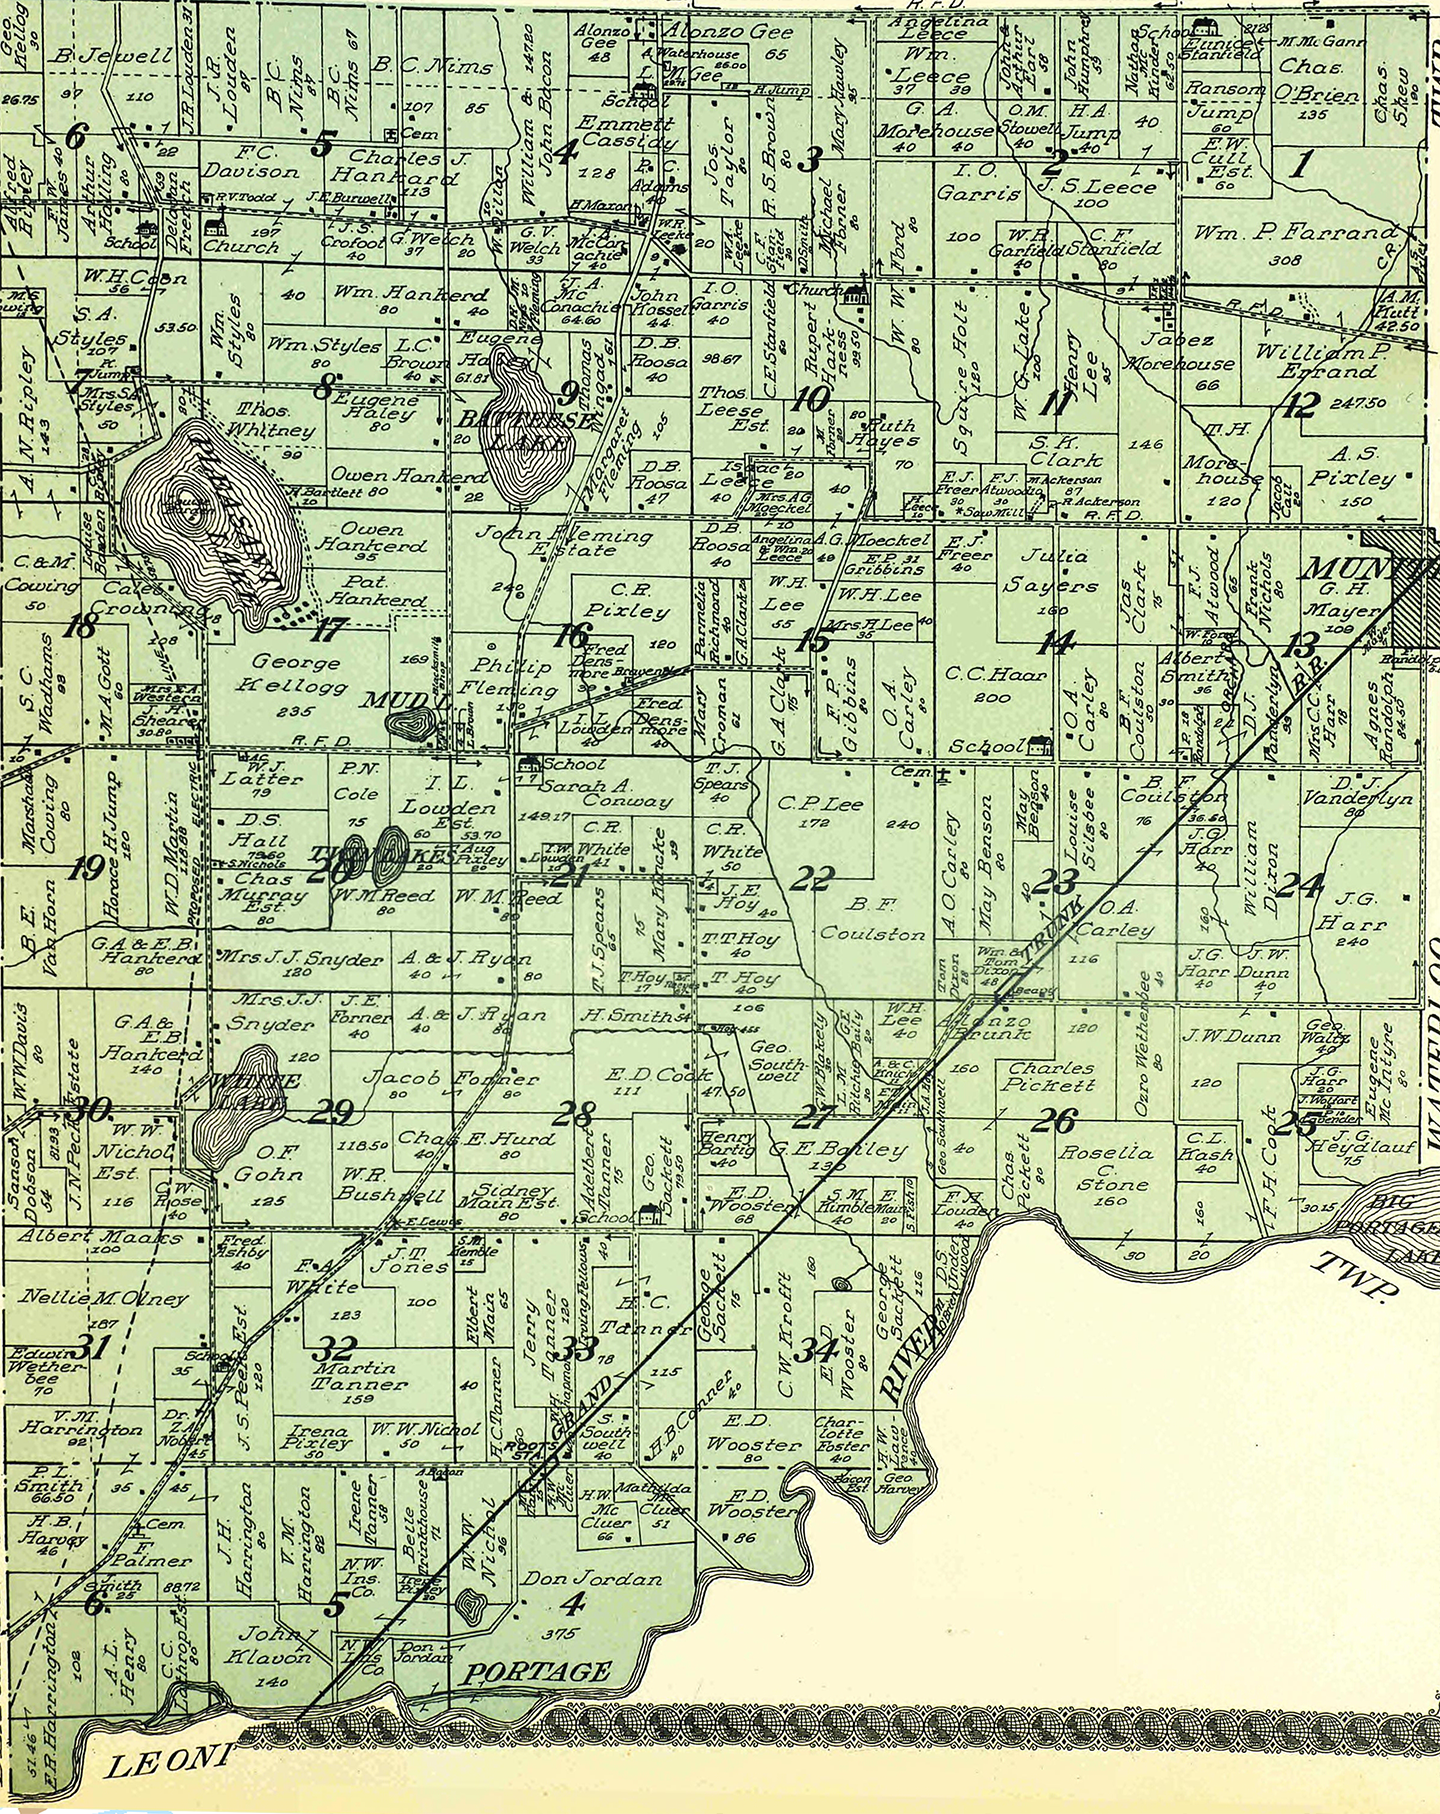 1911 Henrietta Township, Michigan landownership map